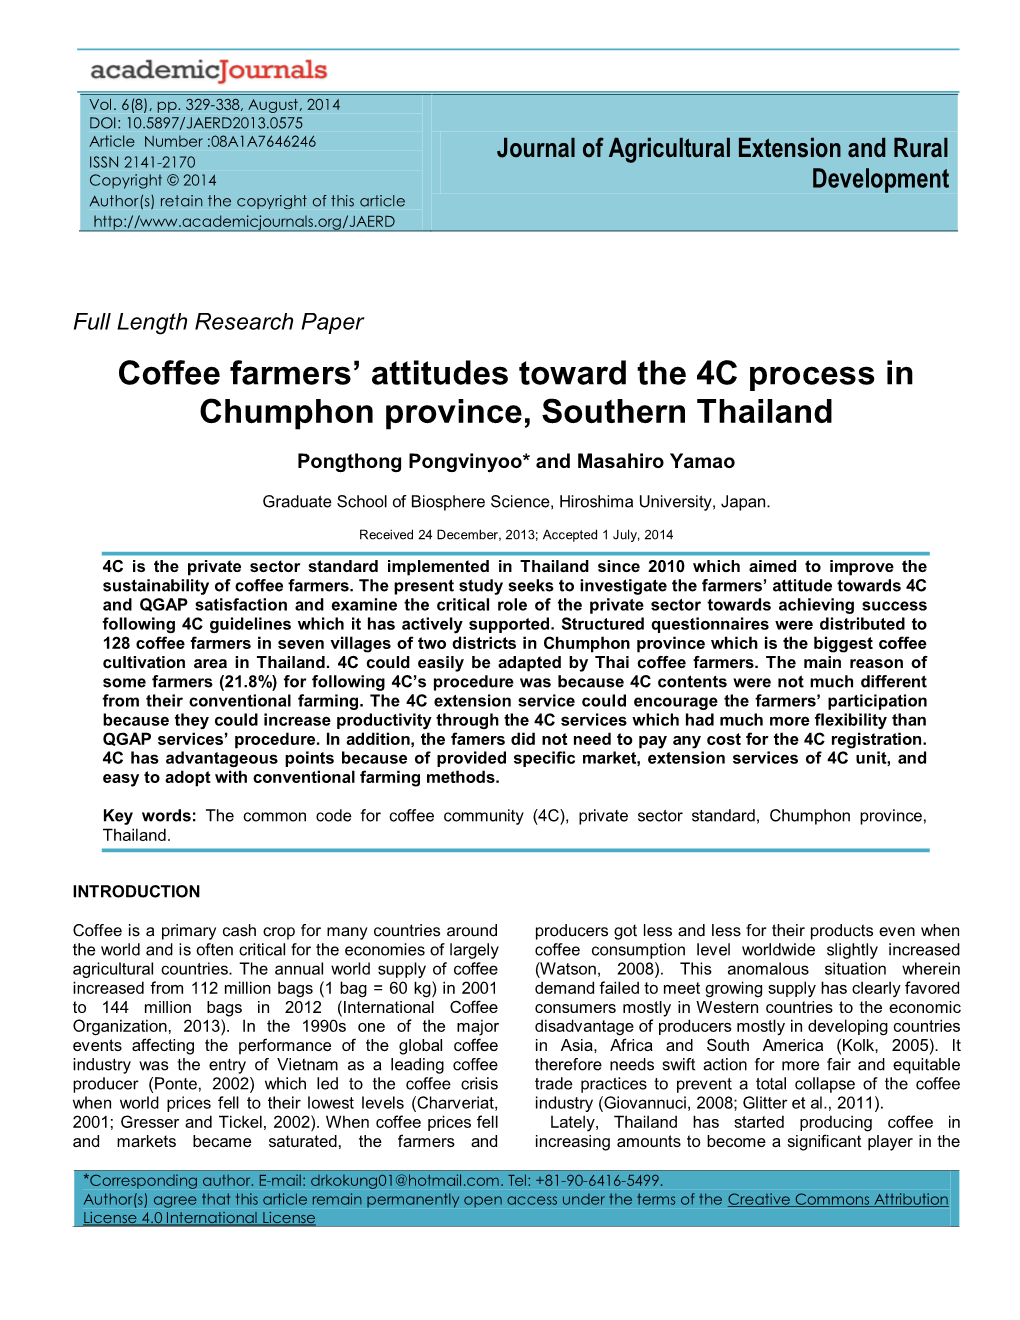 Coffee Farmers' Attitudes Toward the 4C Process in Chumphon Province